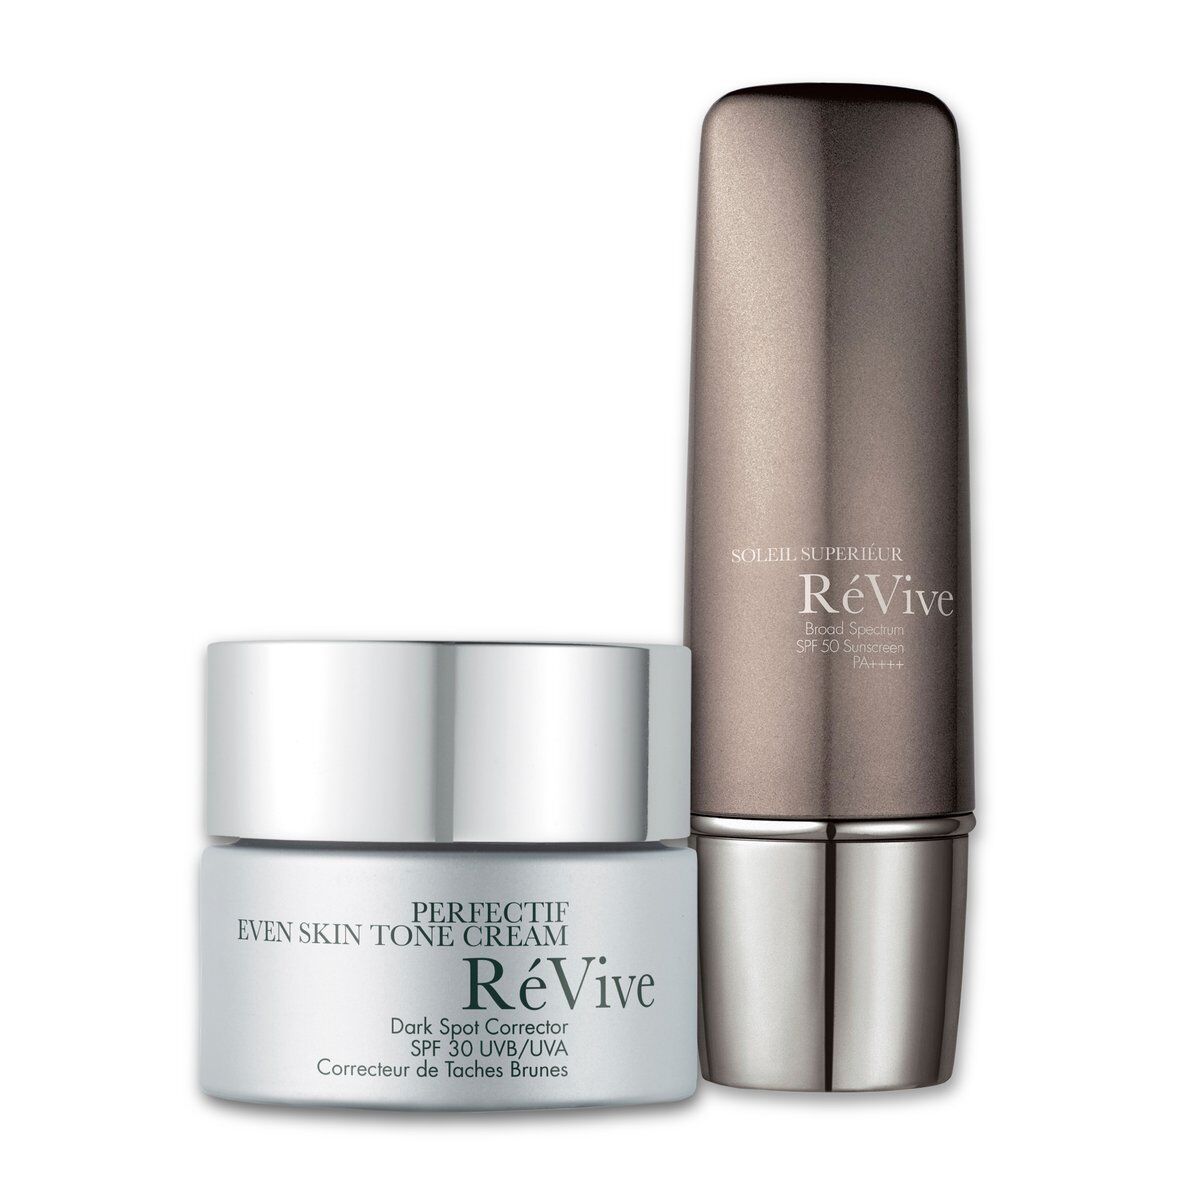 RéVive - Perfectif Even Skin Tone Cream SPF 30 Soleil Superiéur / Sun Protection Duo